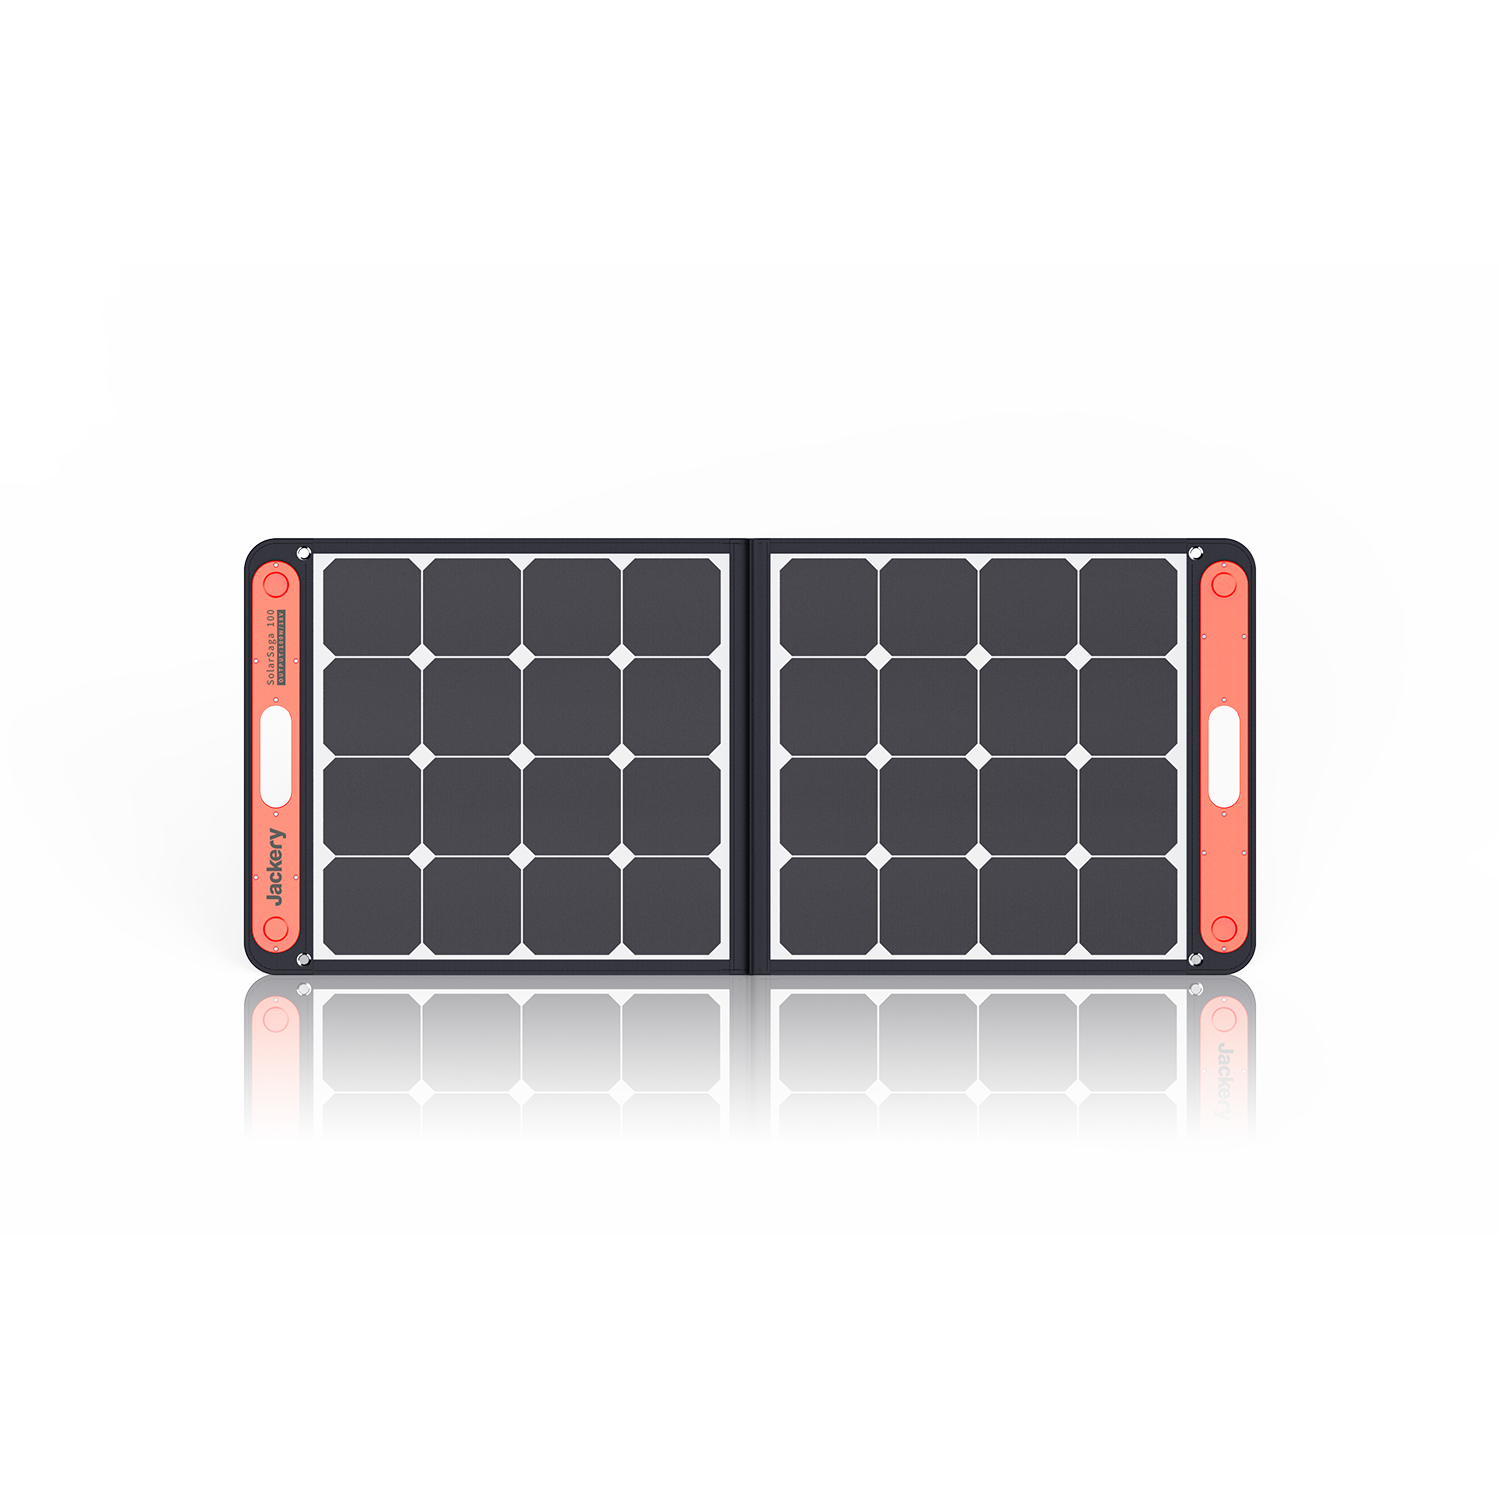 Jackery SolarSaga 100W太陽能電池板